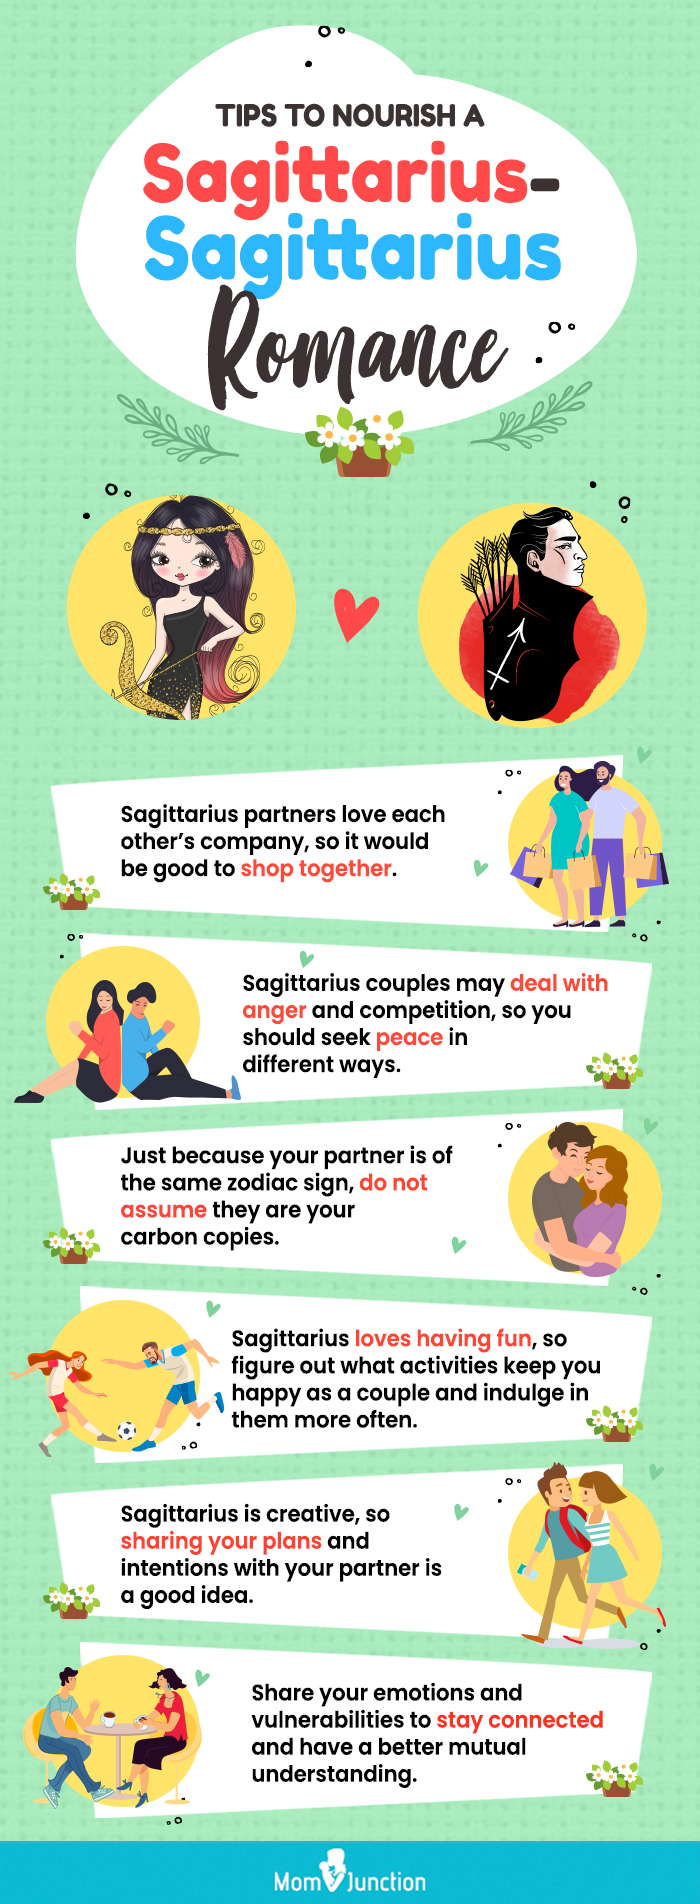 tips to nourish a sagittarius and sagittarius romance [infographic]